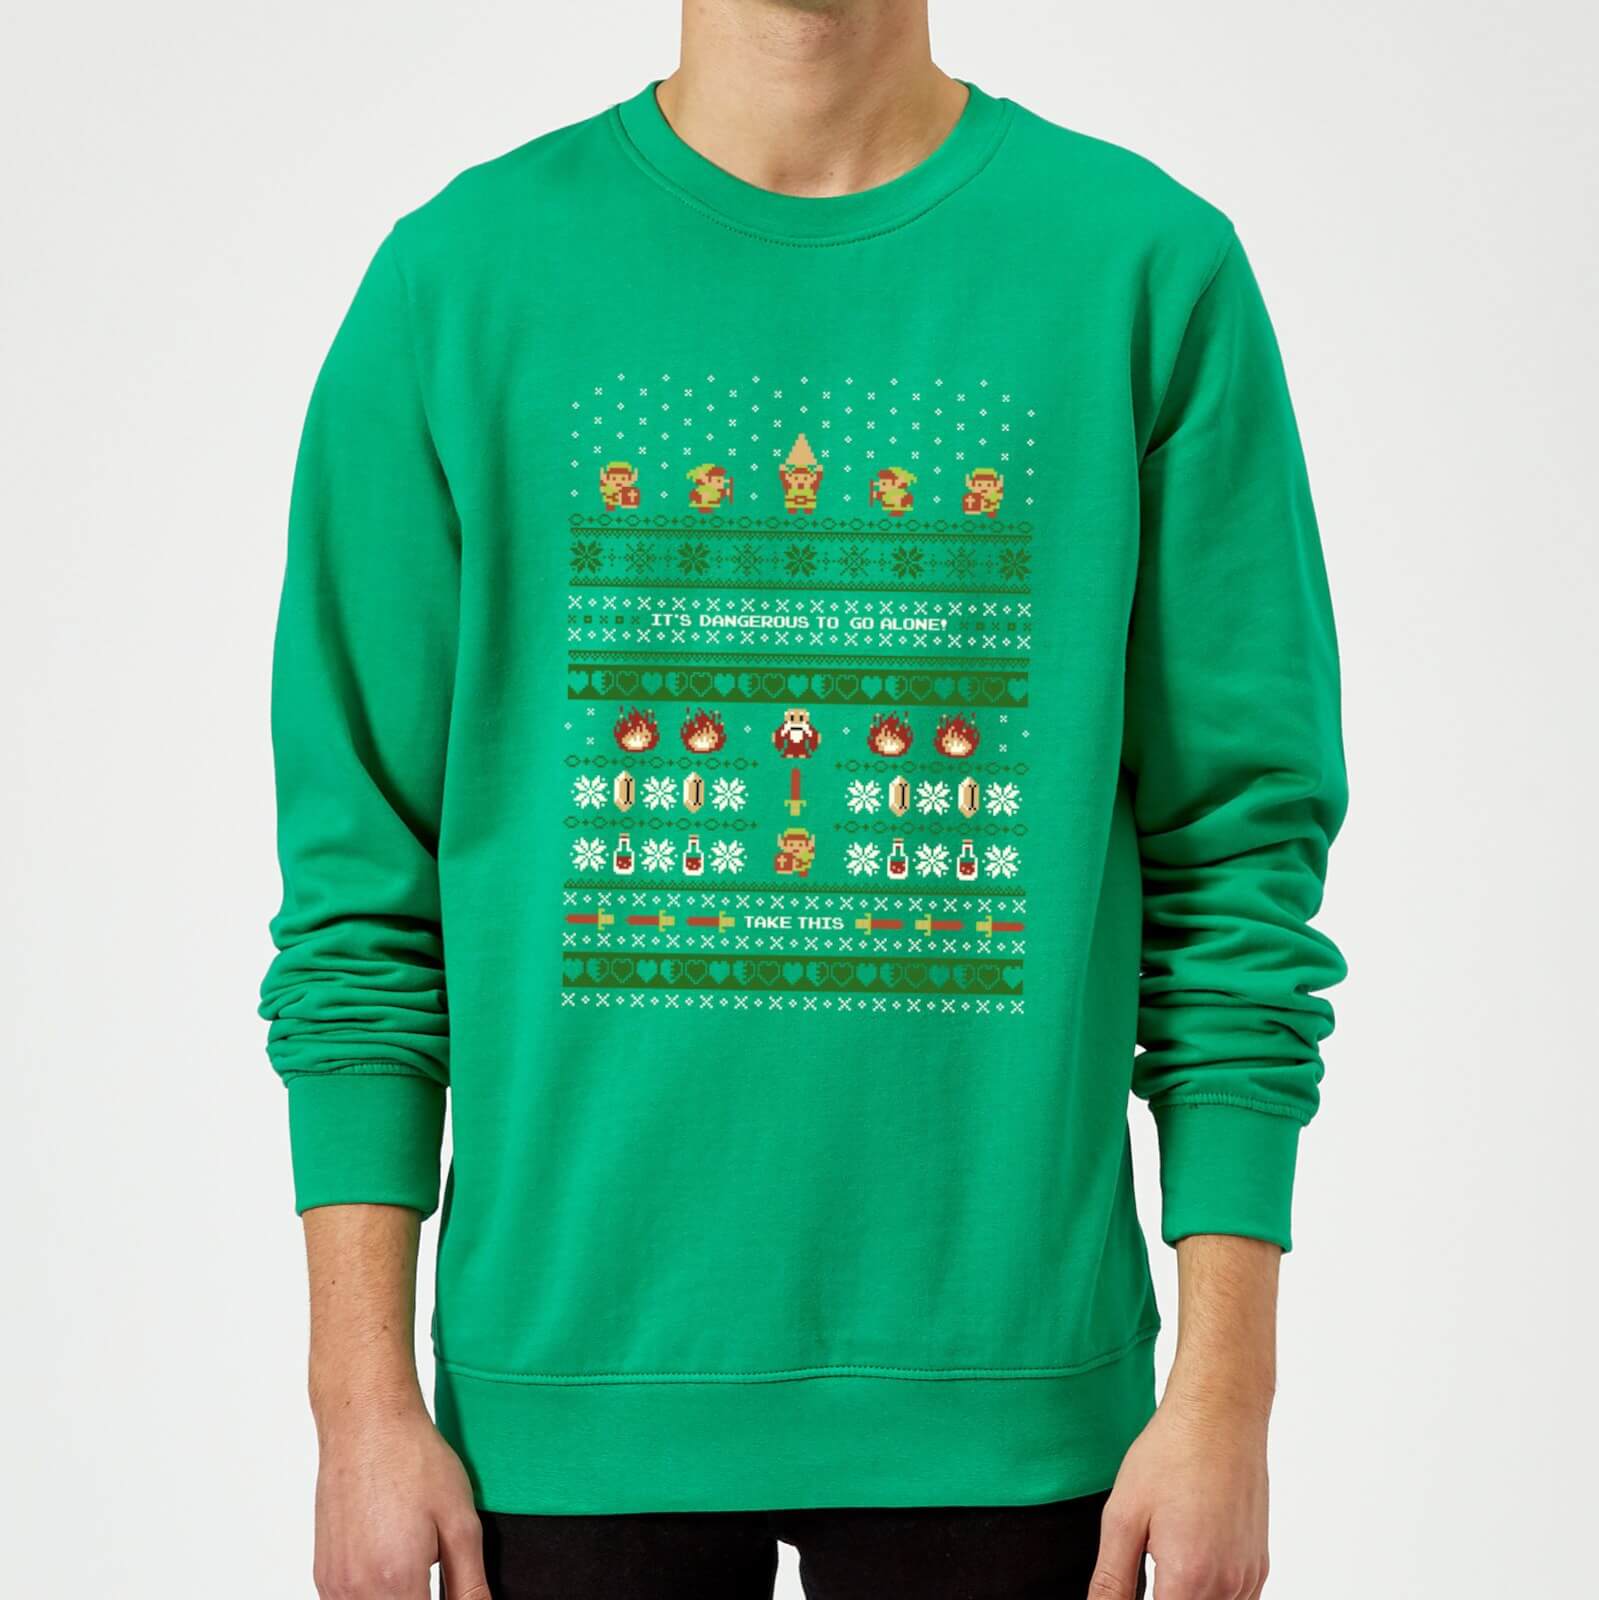 Nintendo The Legend Of Zelda It's Dangerous To Go Alone Green Christmas Sweatshirt - XL - Green